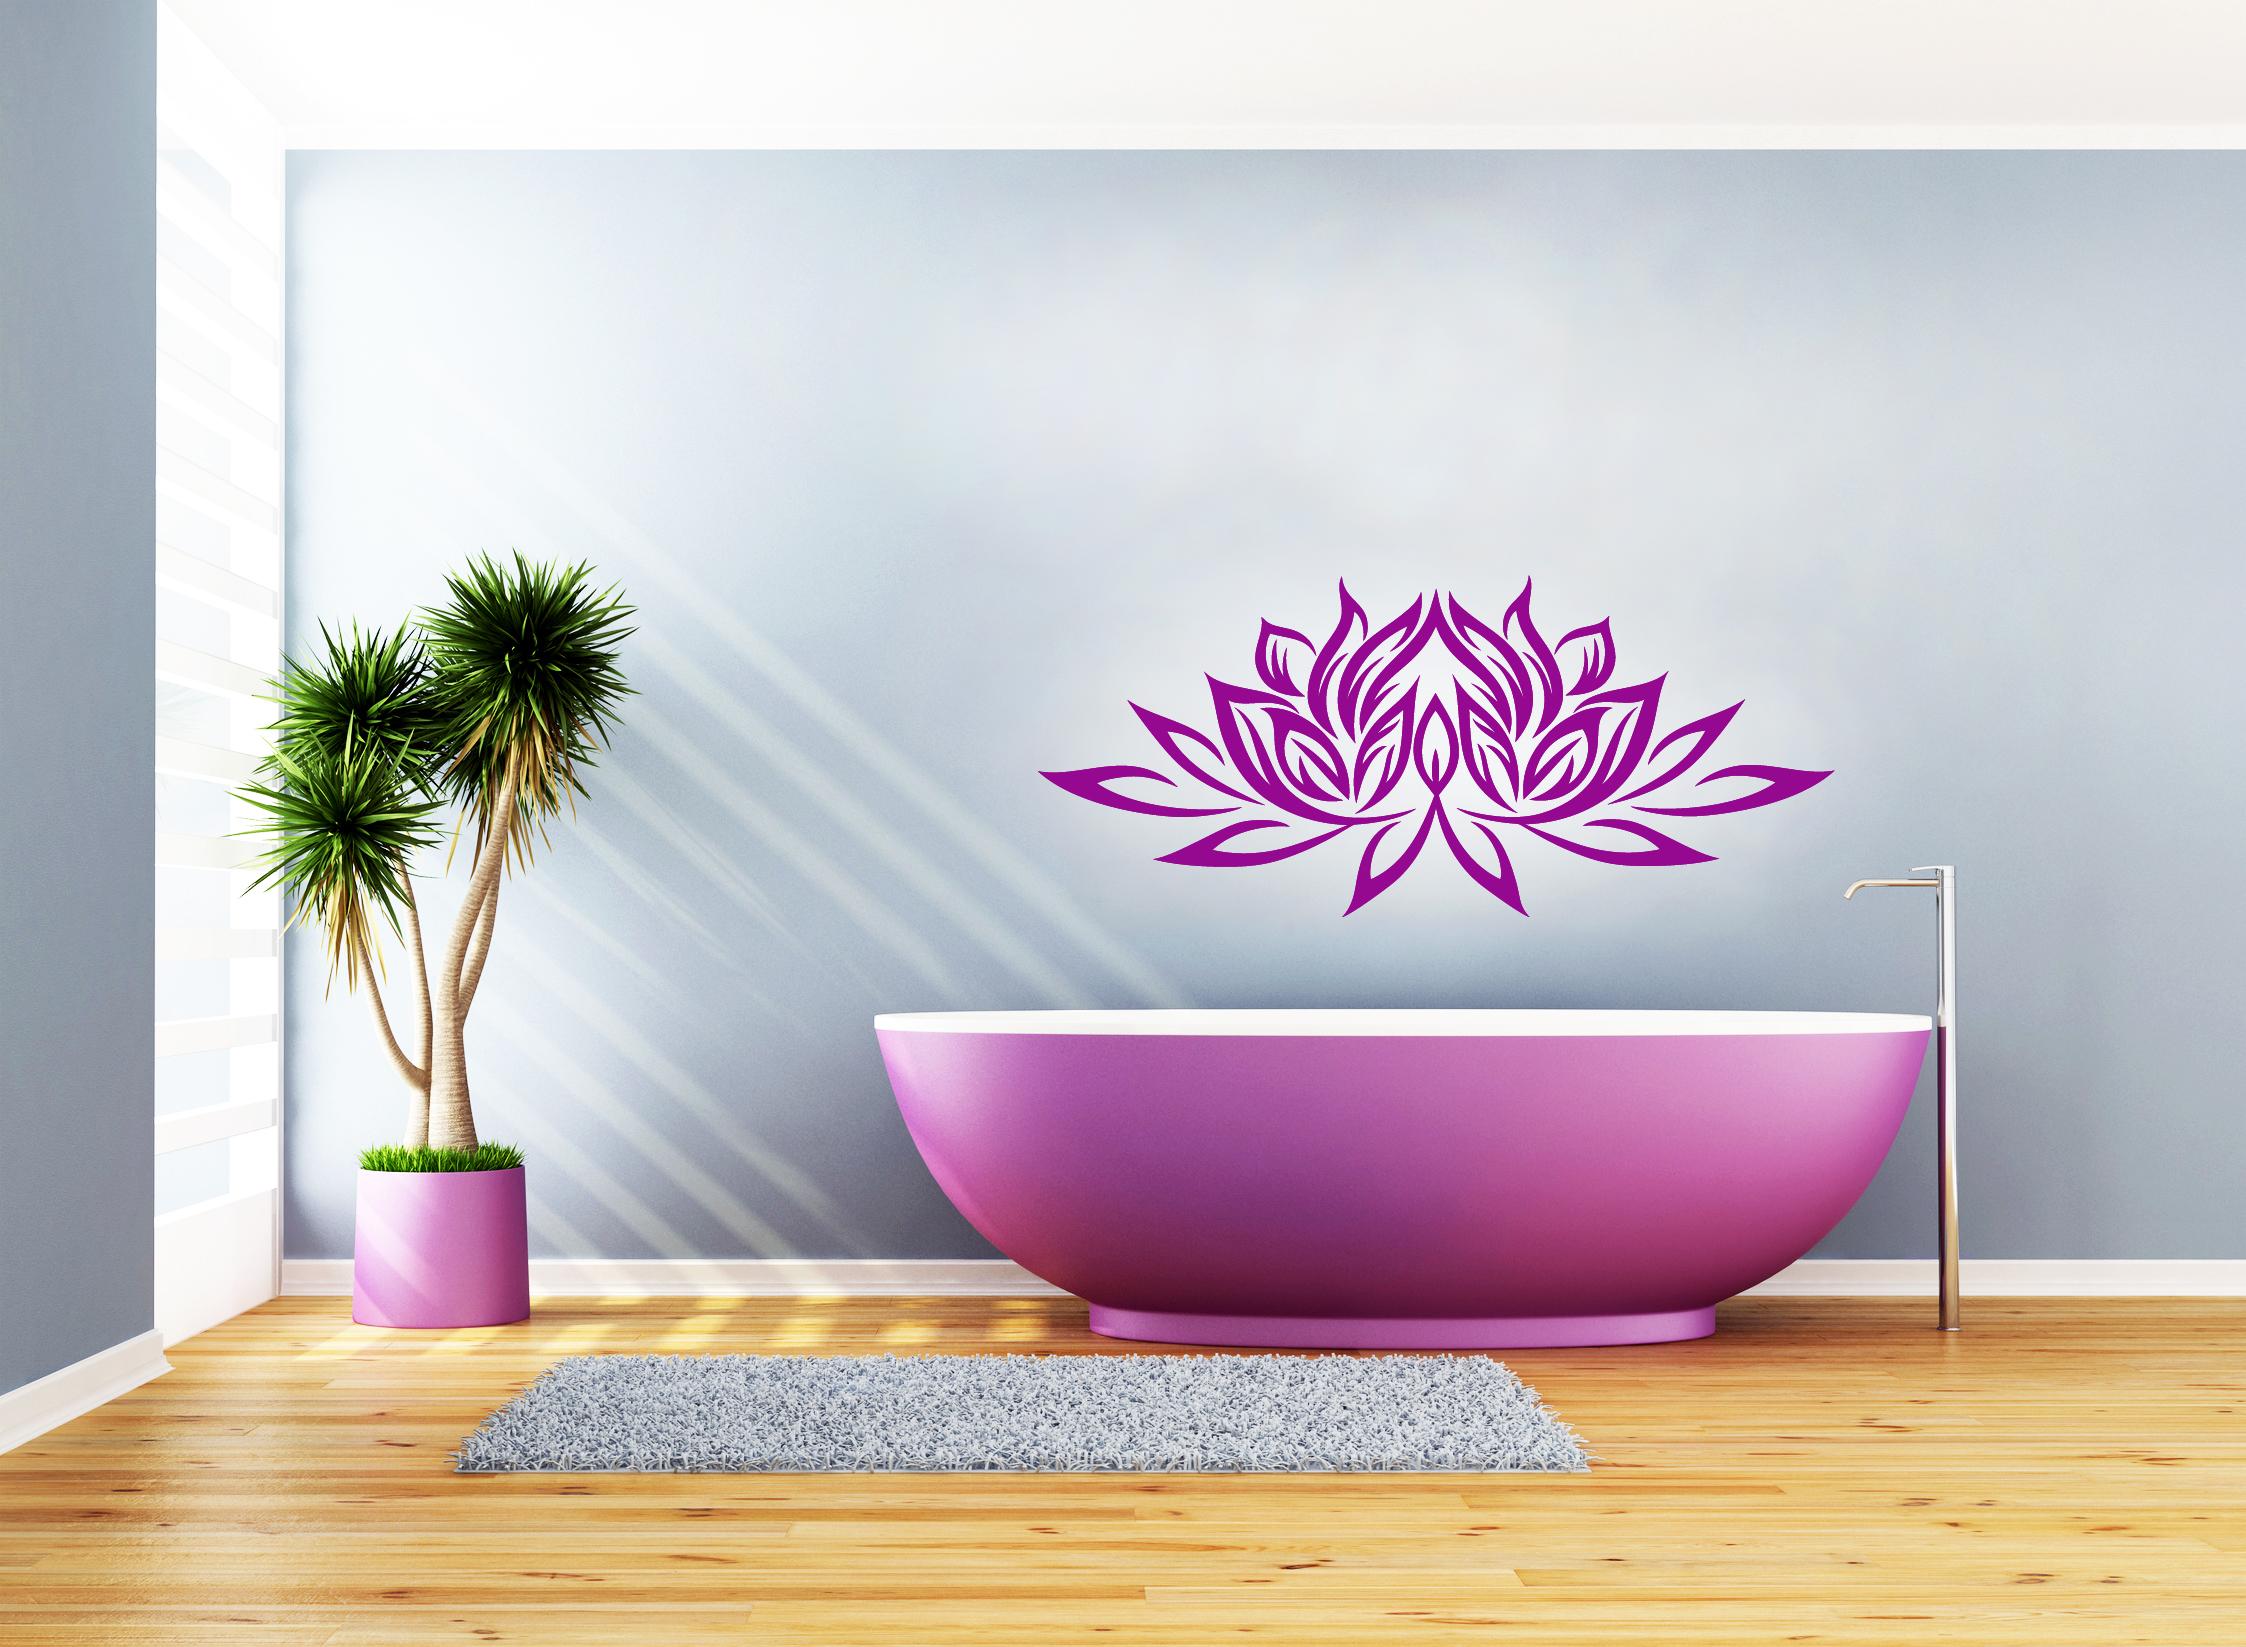 Lotusblume Wandtattoo in der Farbe Pflaume #wandtattoo ©archideaphoto - Fotolia